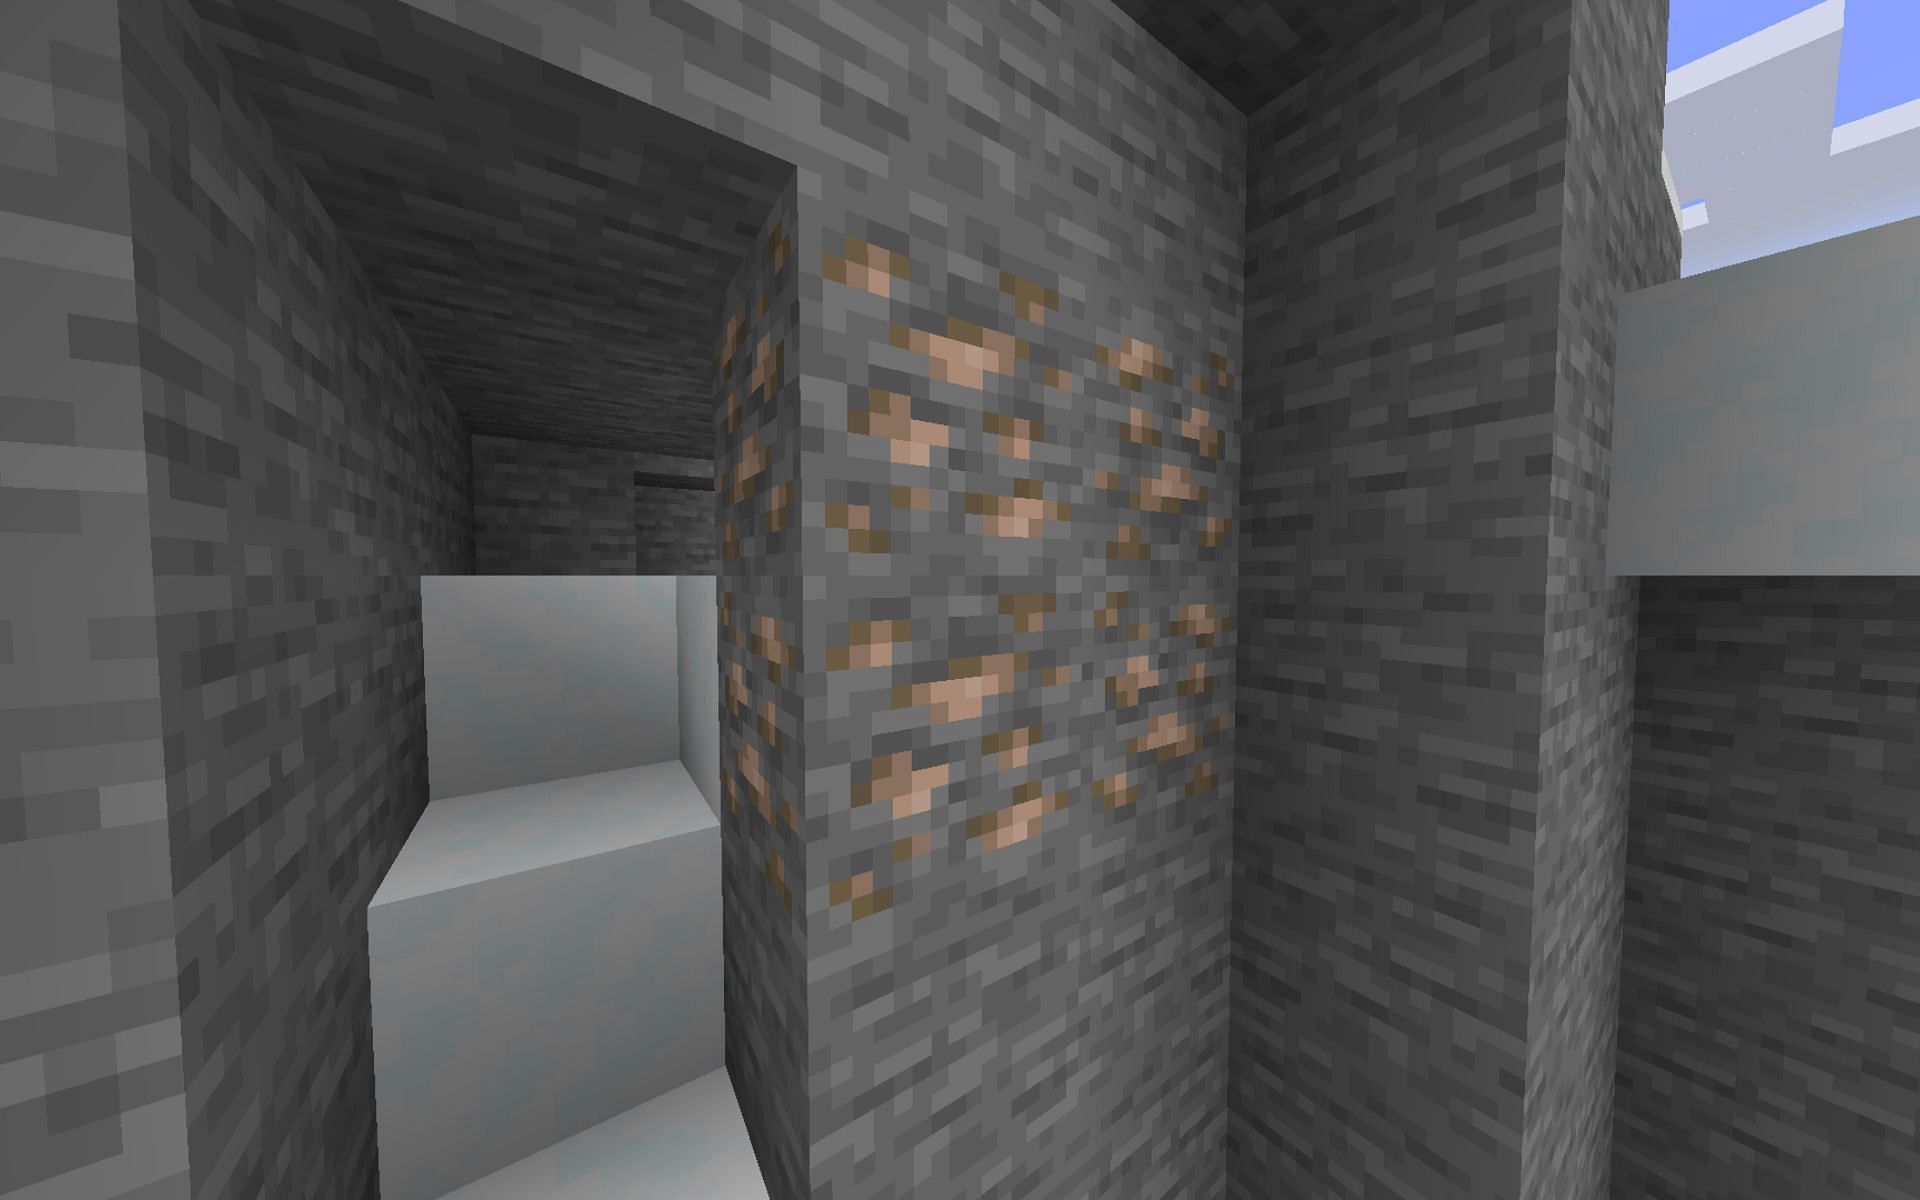 Iron ore blocks in Minecraft (Image via Minecraft)